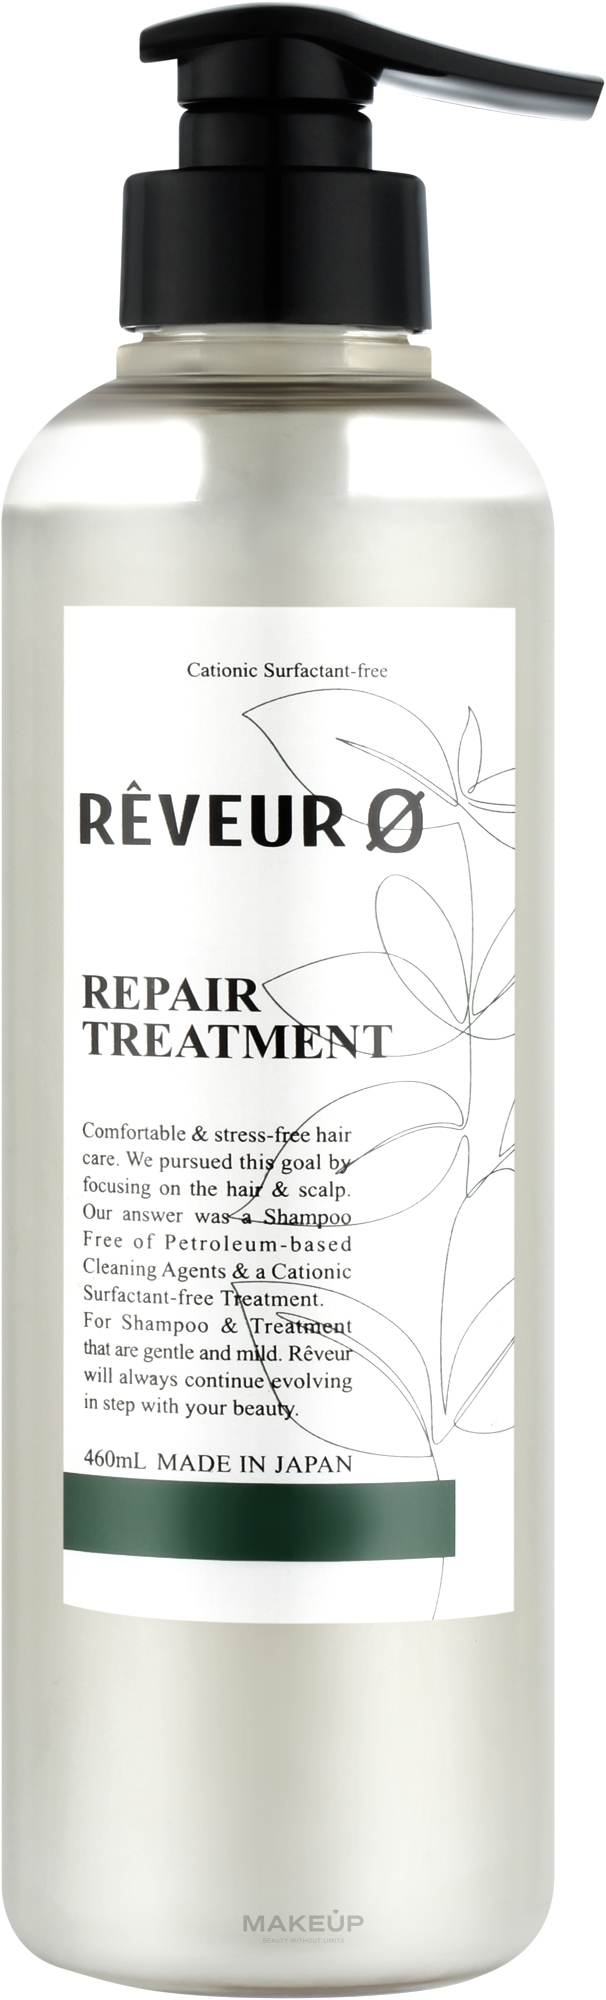 Безкатионный кондиционер для волос - Reveur Cation Free Treatment  — фото 460ml